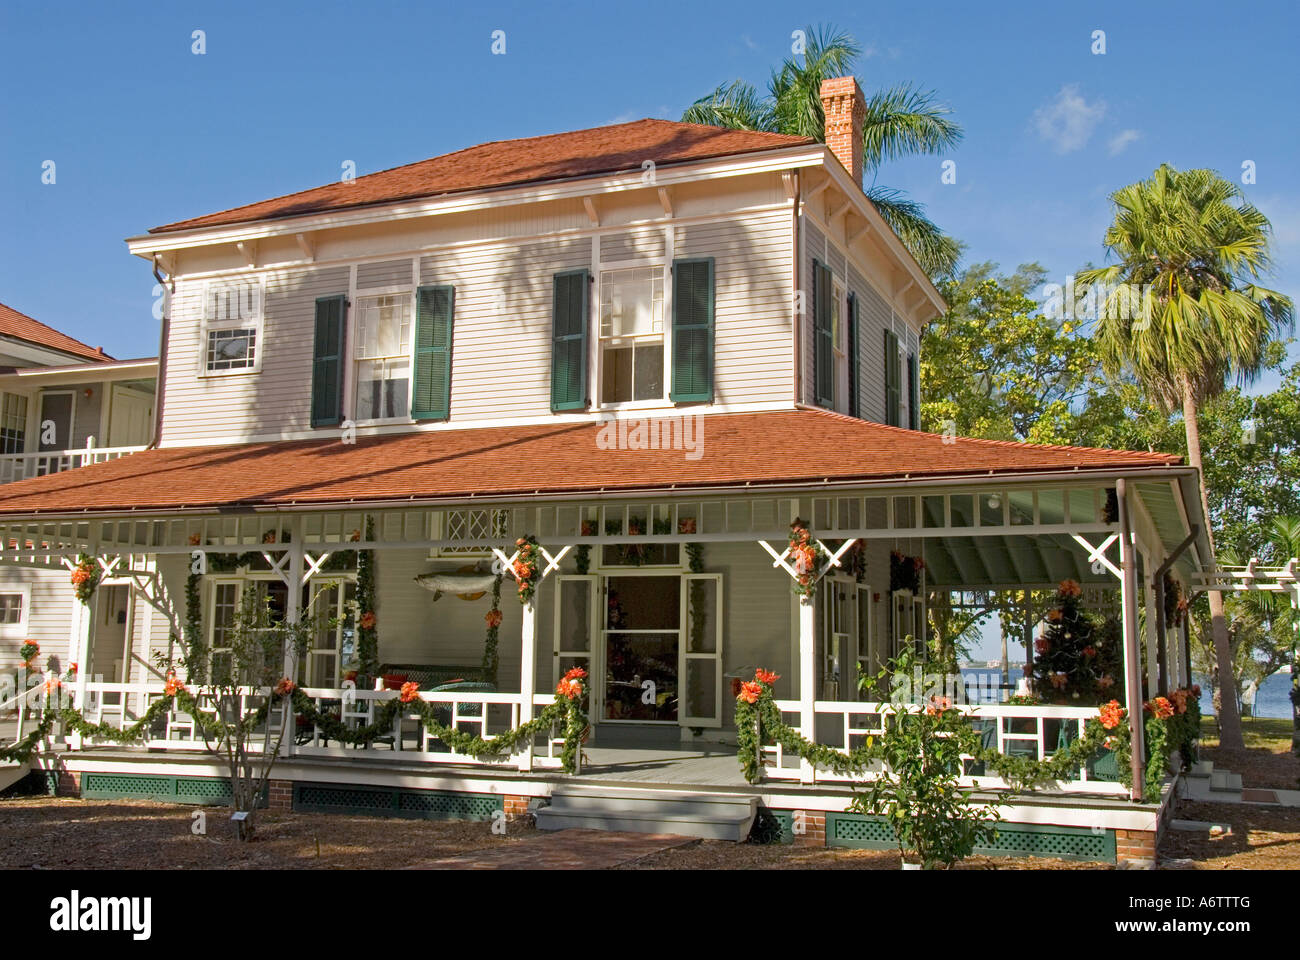 Thomas Edison Winter home Immobilien Fort Myers Florida mit Weihnachtsschmuck Stockfoto